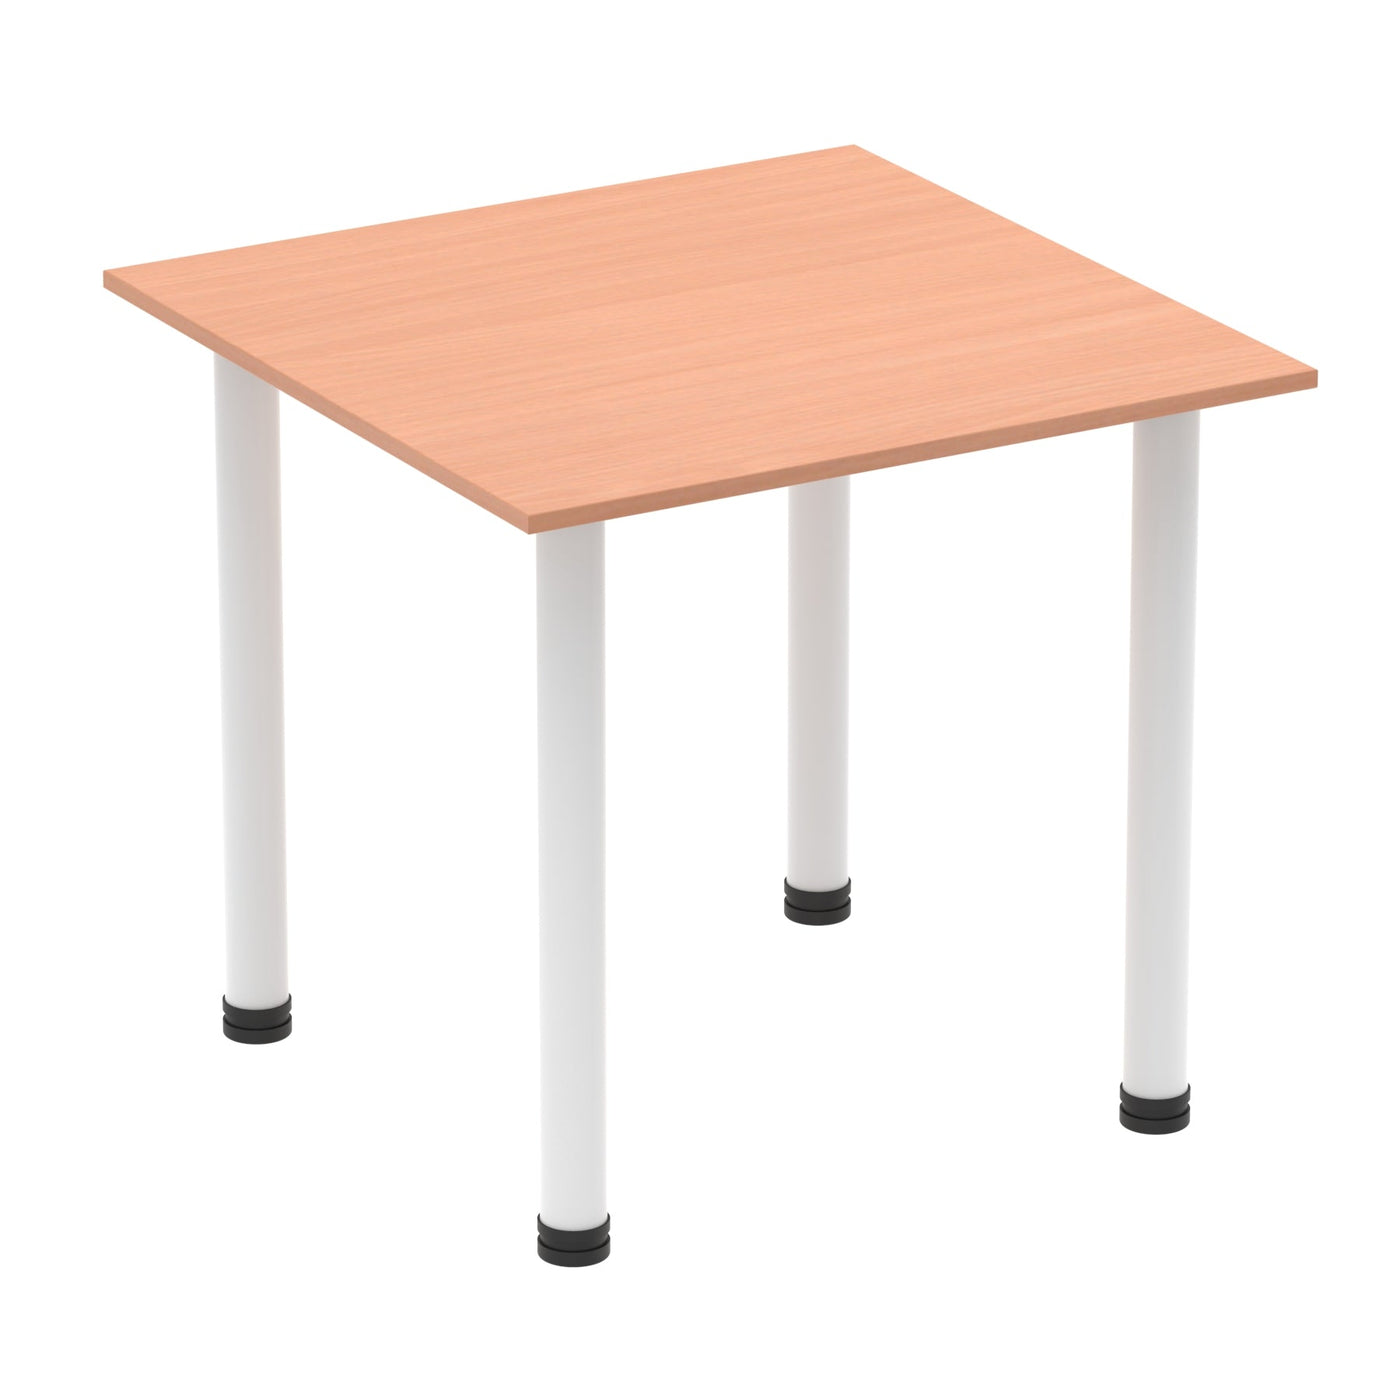 Impulse 1200mm Straight Desk with Post Leg | Home Office Furniture | Wooden Desk | Simple Desk | Homework Desk | Work From Home Desk | Wooden desk with black legs